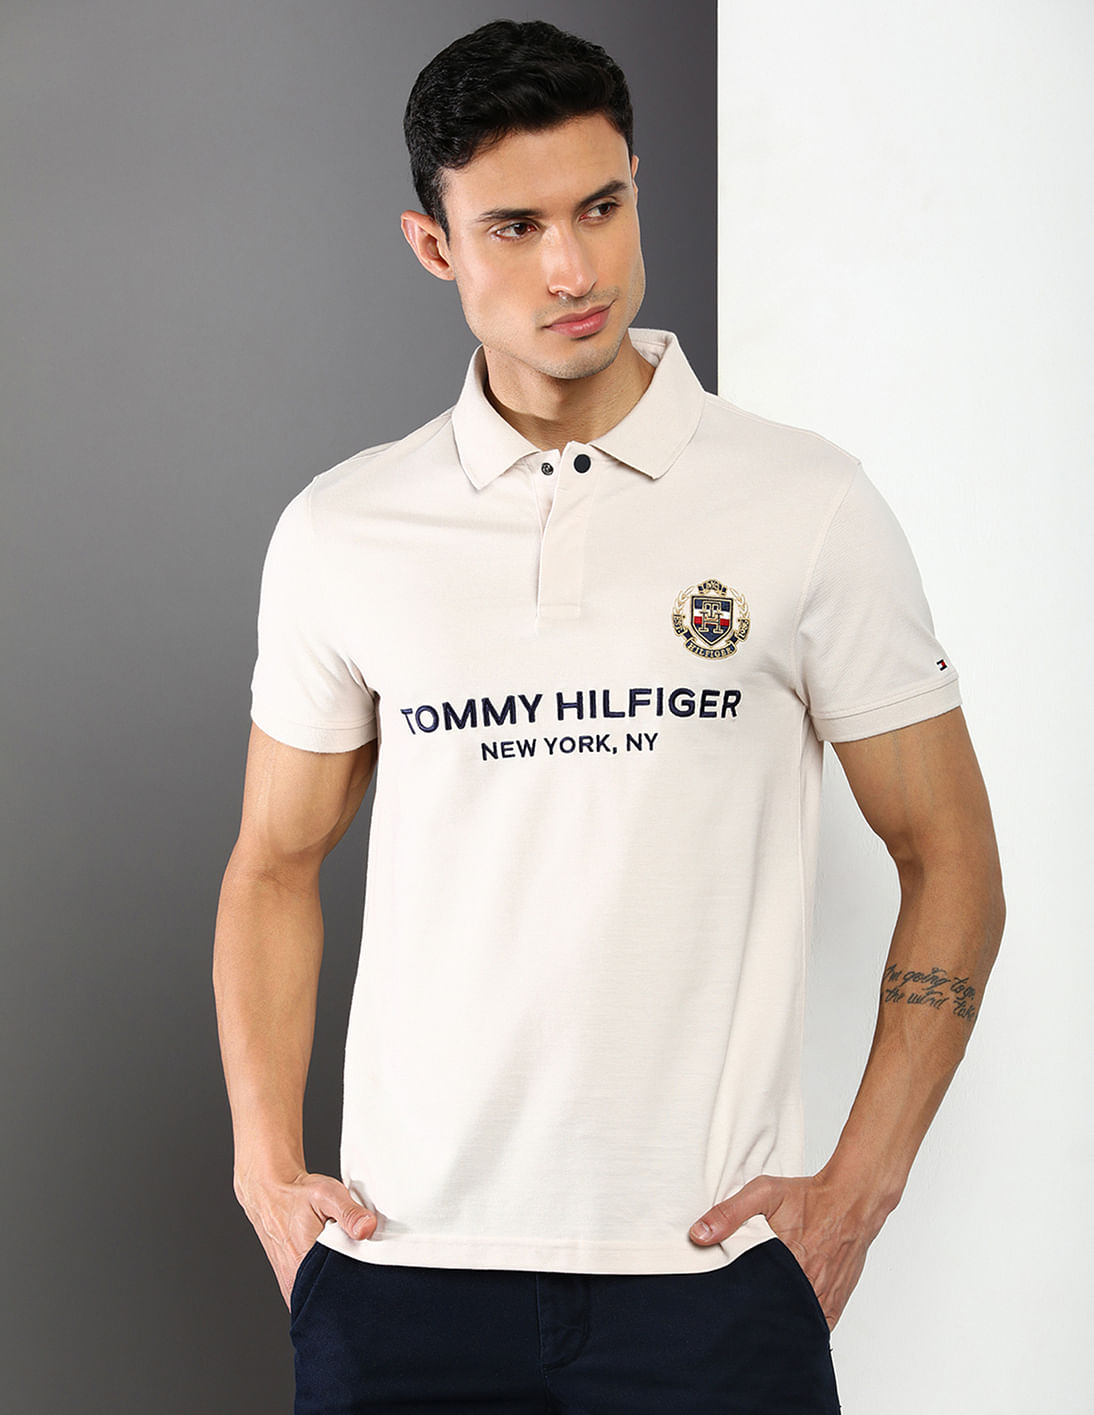 Fit Crest Shirt Logo Hilfiger Slim Buy Tommy Polo